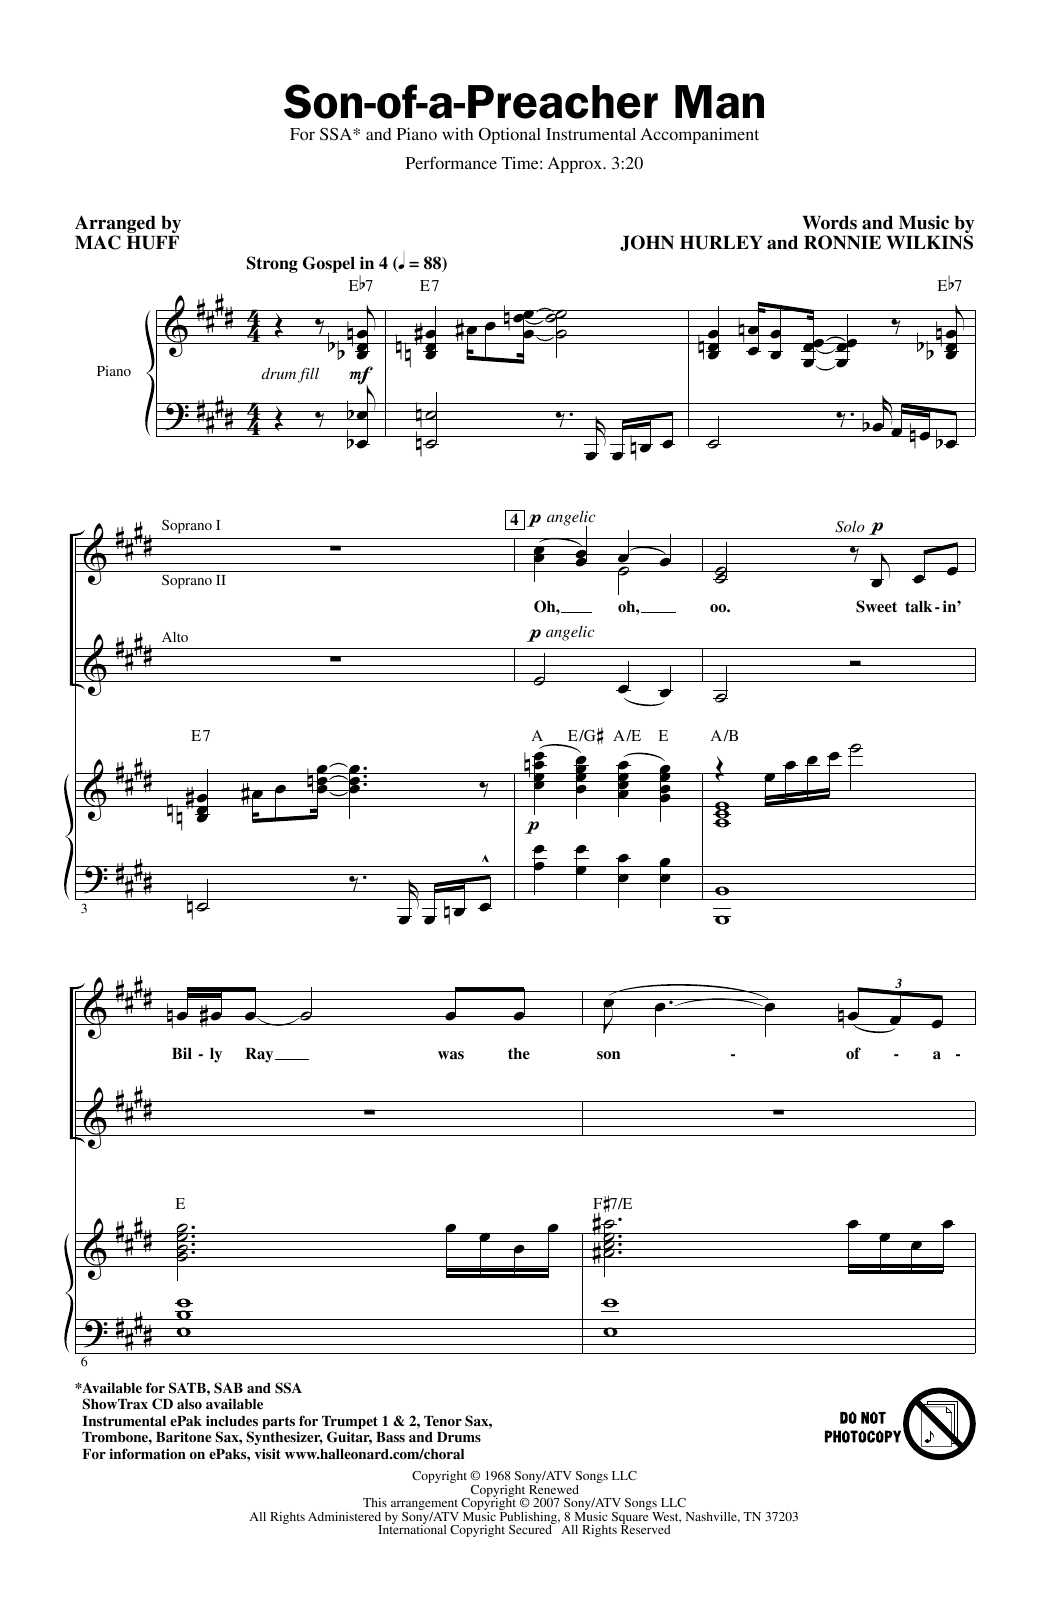 Dusty Springfield Son-Of-A-Preacher Man (arr. Mac Huff) Sheet Music Notes & Chords for SATB Choir - Download or Print PDF